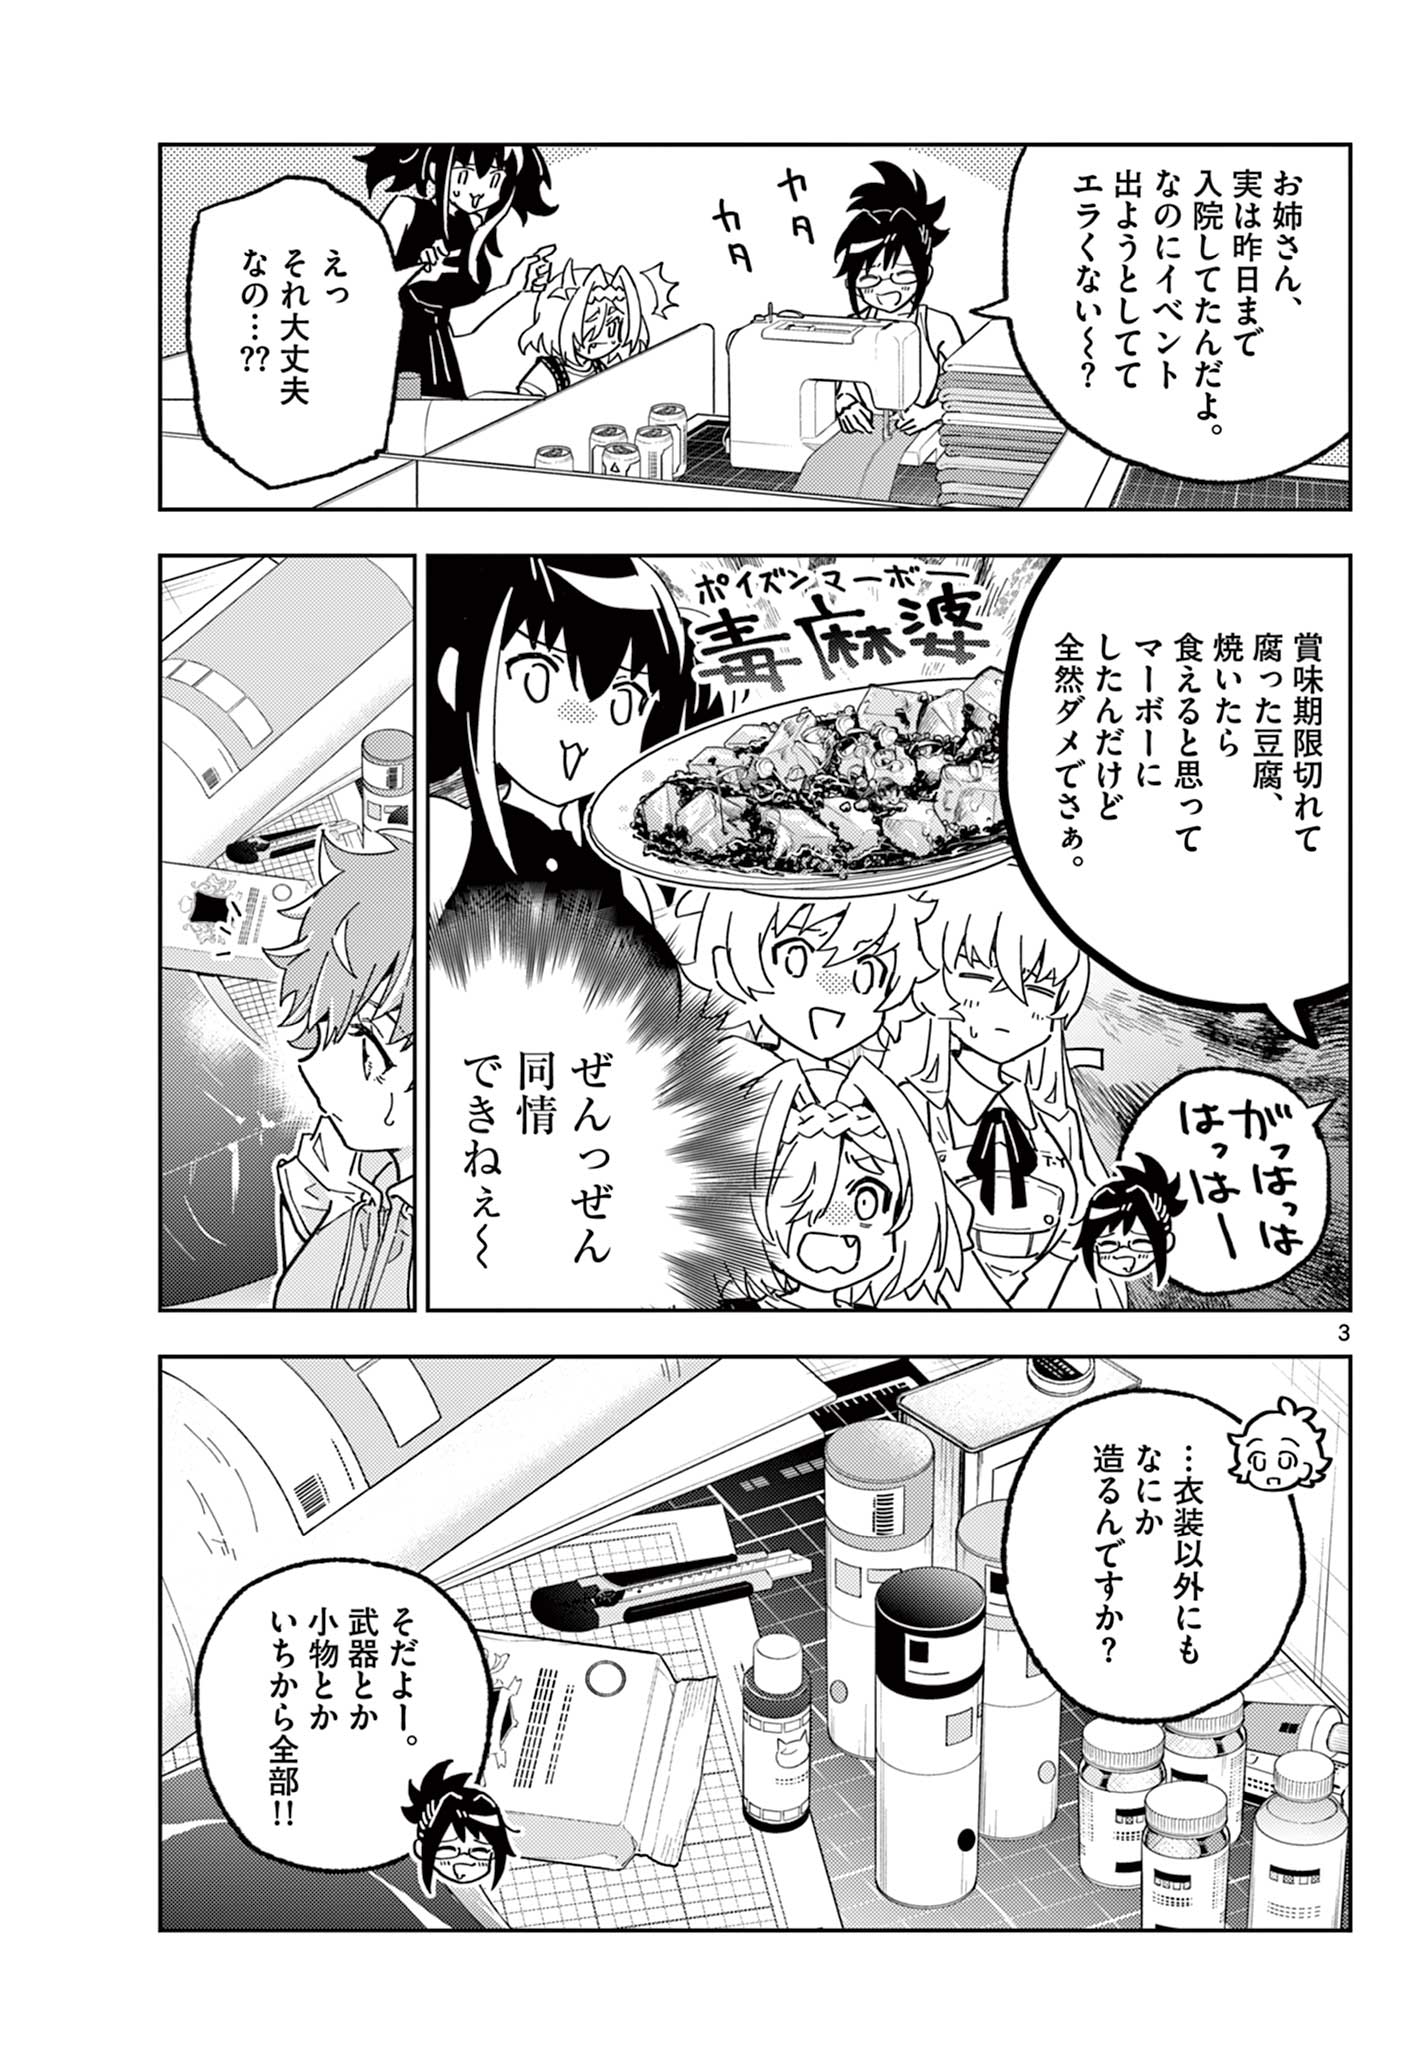 Gareki! Modeller Girls no Houkago - Chapter 18.5 - Page 3